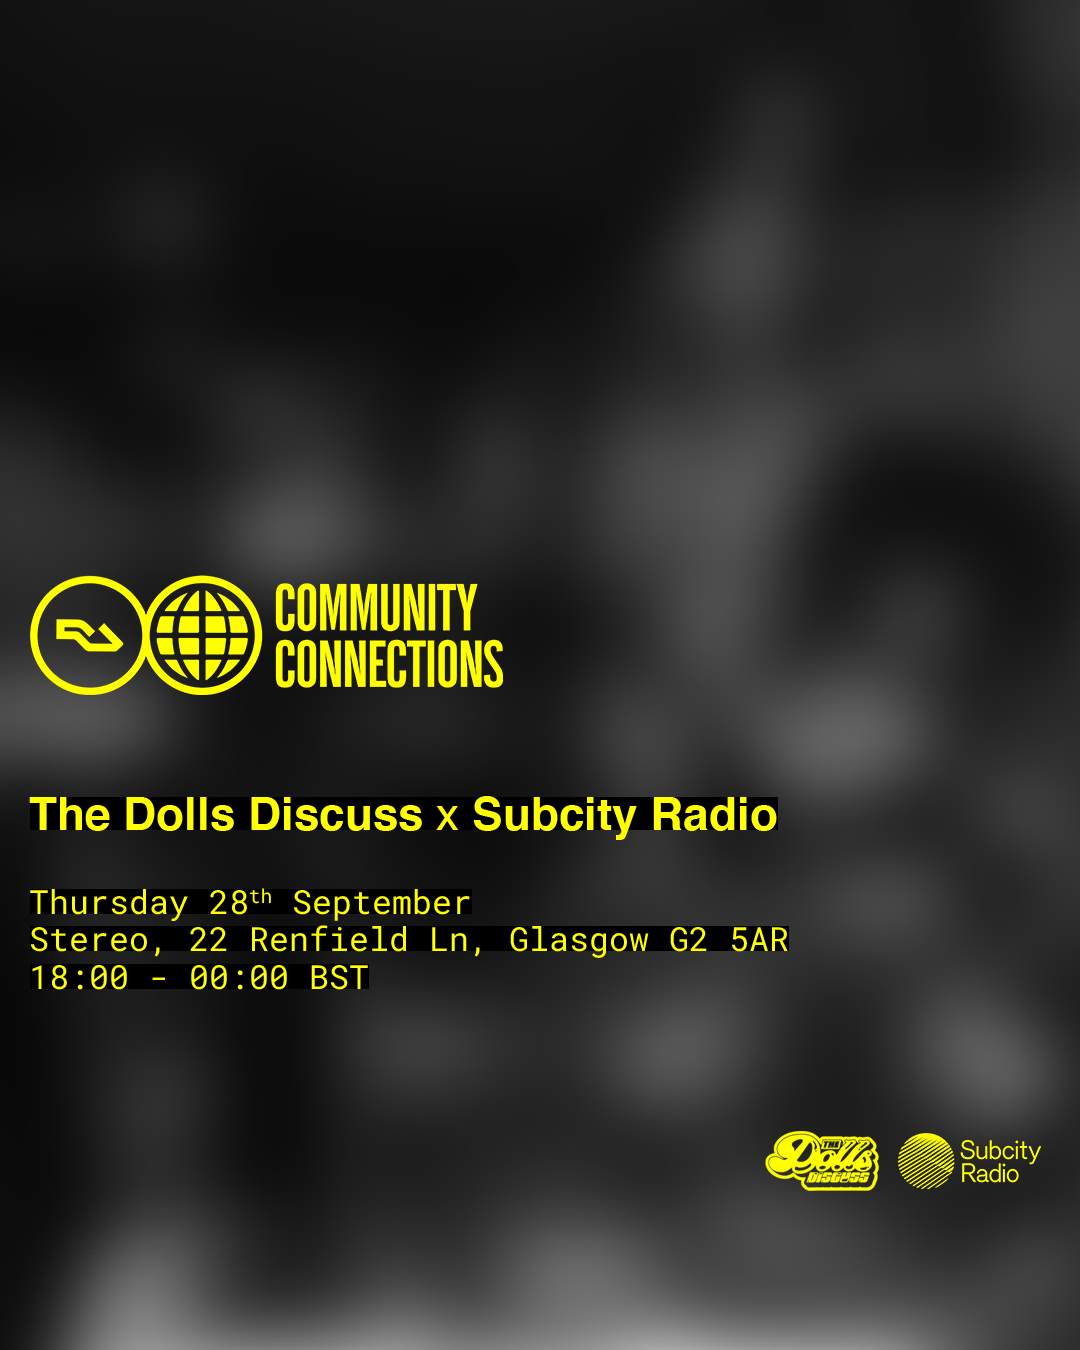 RA CC Glasgow x Subcity Radio x The Dolls Discuss - Página trasera